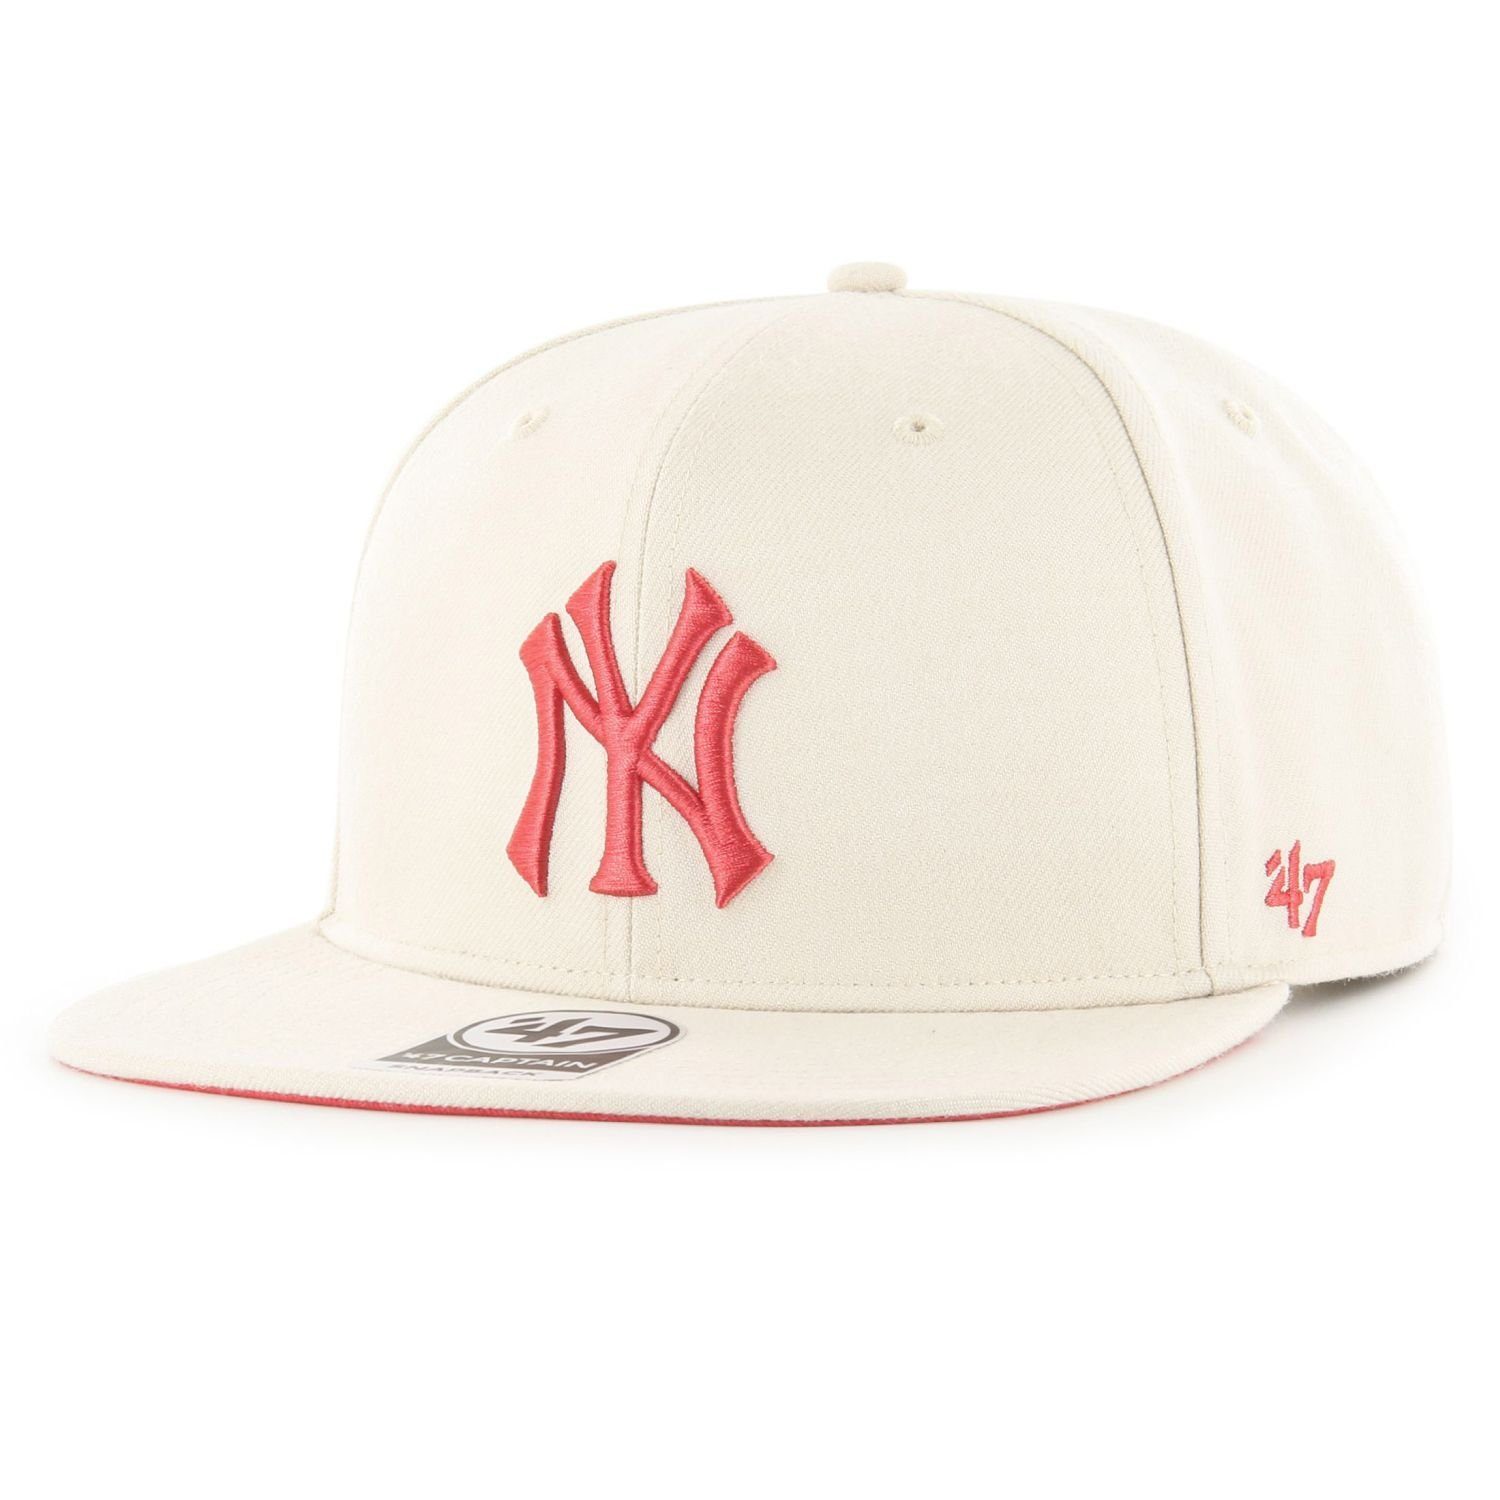 '47 Brand York Snapback New Cap CAPTAIN Yankees